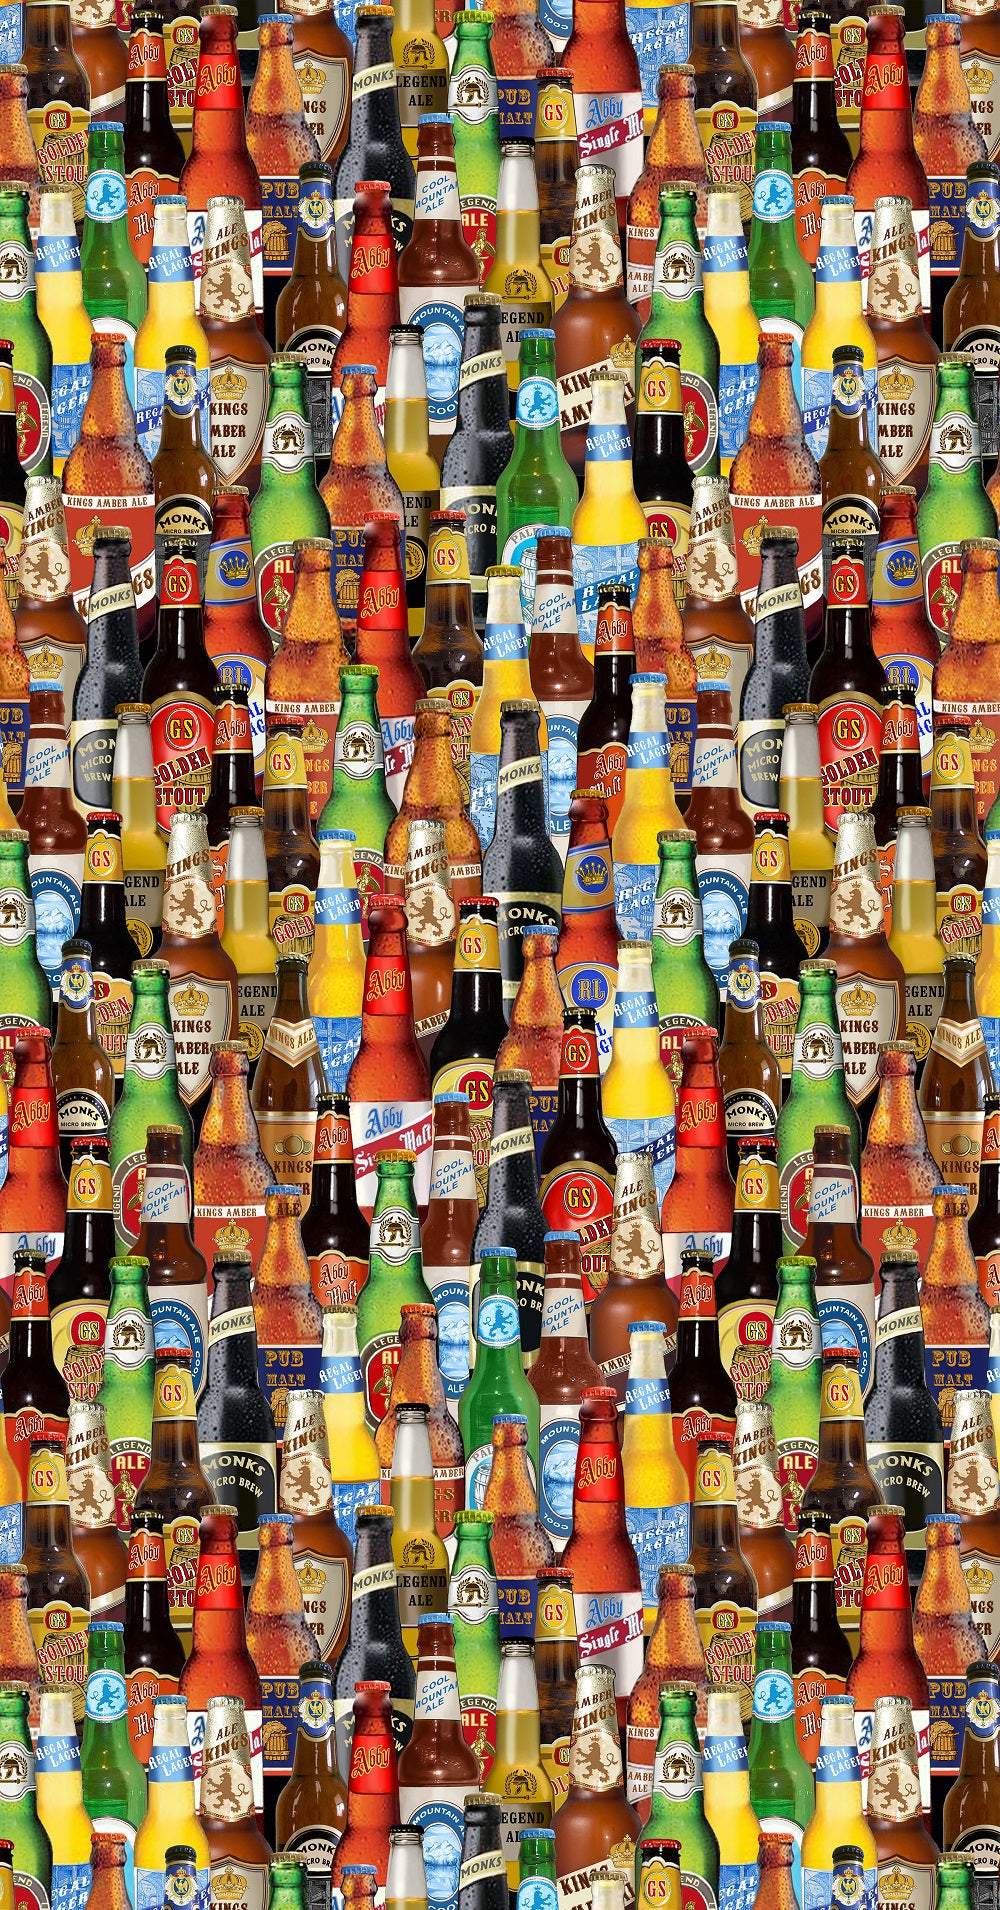 Ale House Digital Beer Bottles By Kanvas Studio For Benartex Digital Multi